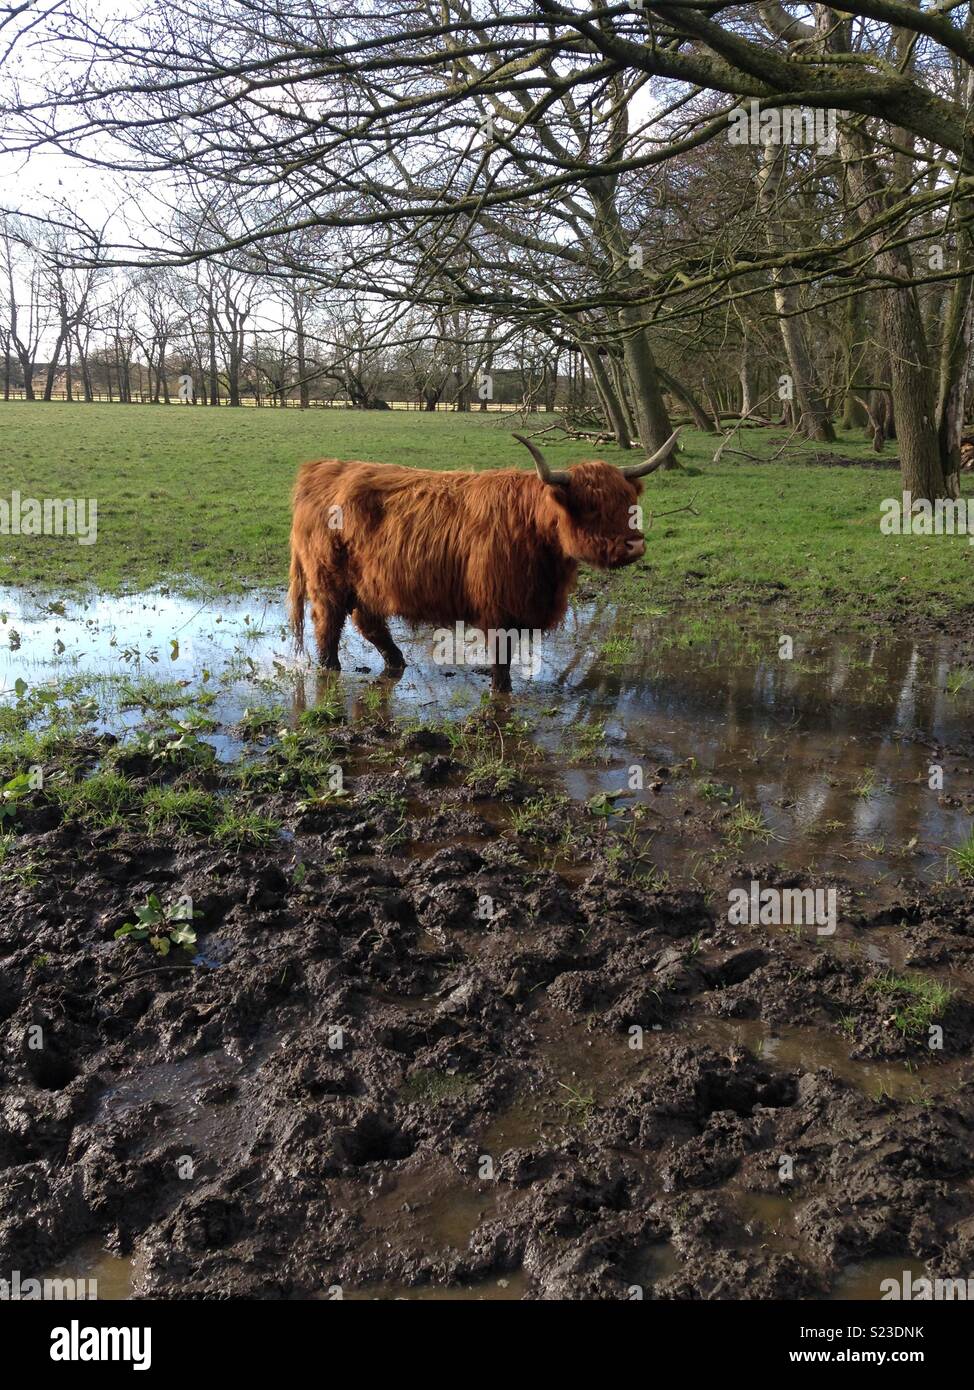 Bull in the mud Stock Photo